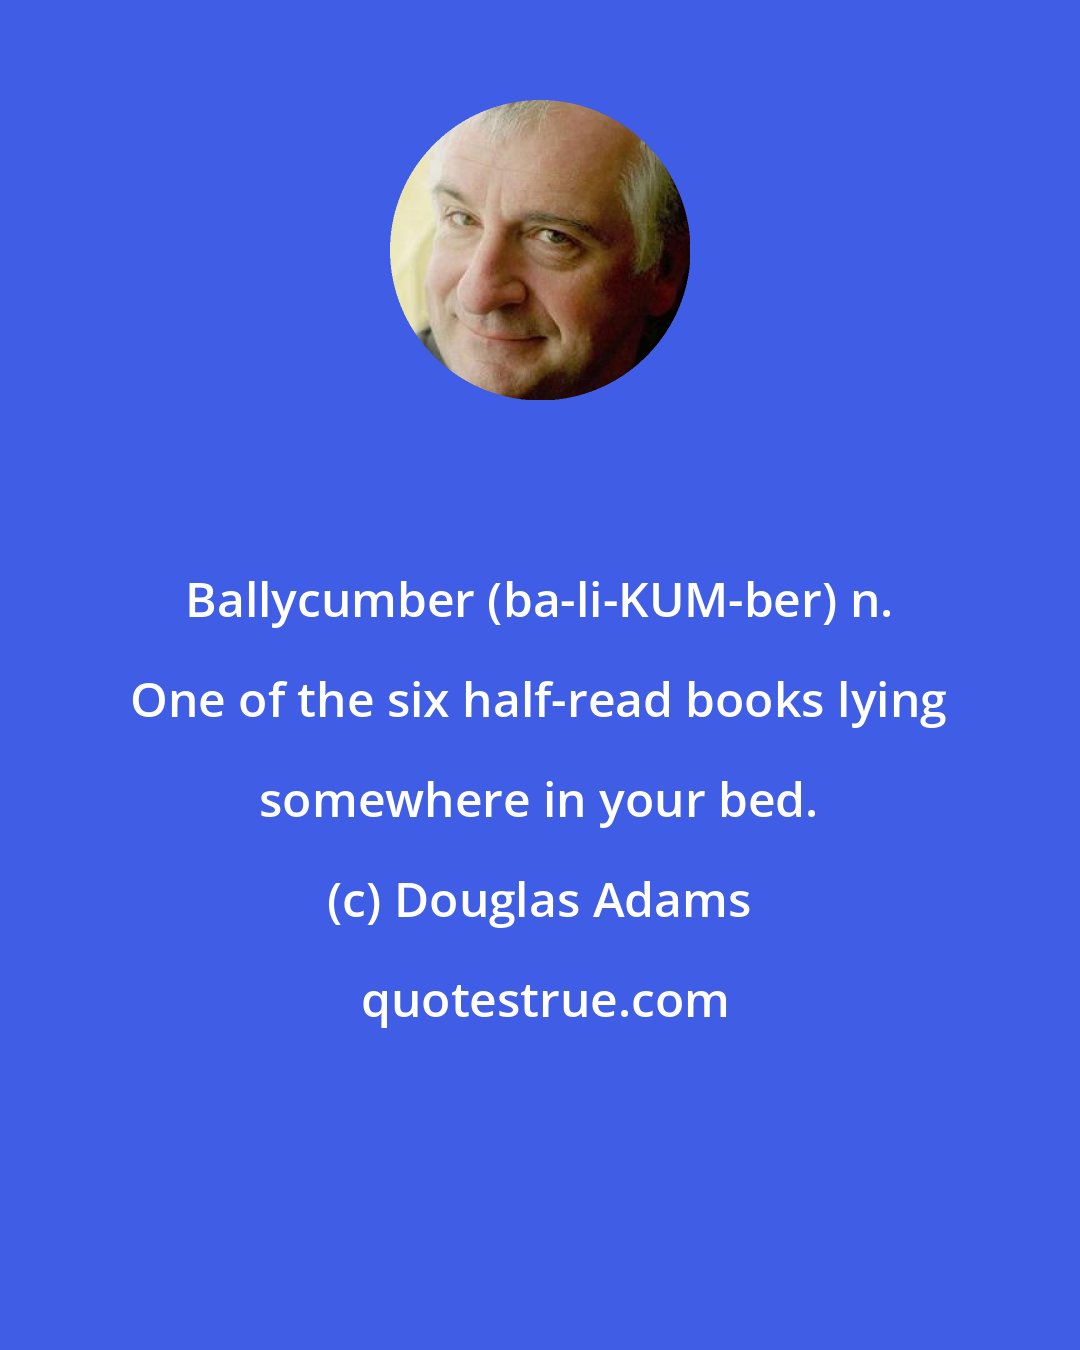 Douglas Adams: Ballycumber (ba-li-KUM-ber) n. One of the six half-read books lying somewhere in your bed.